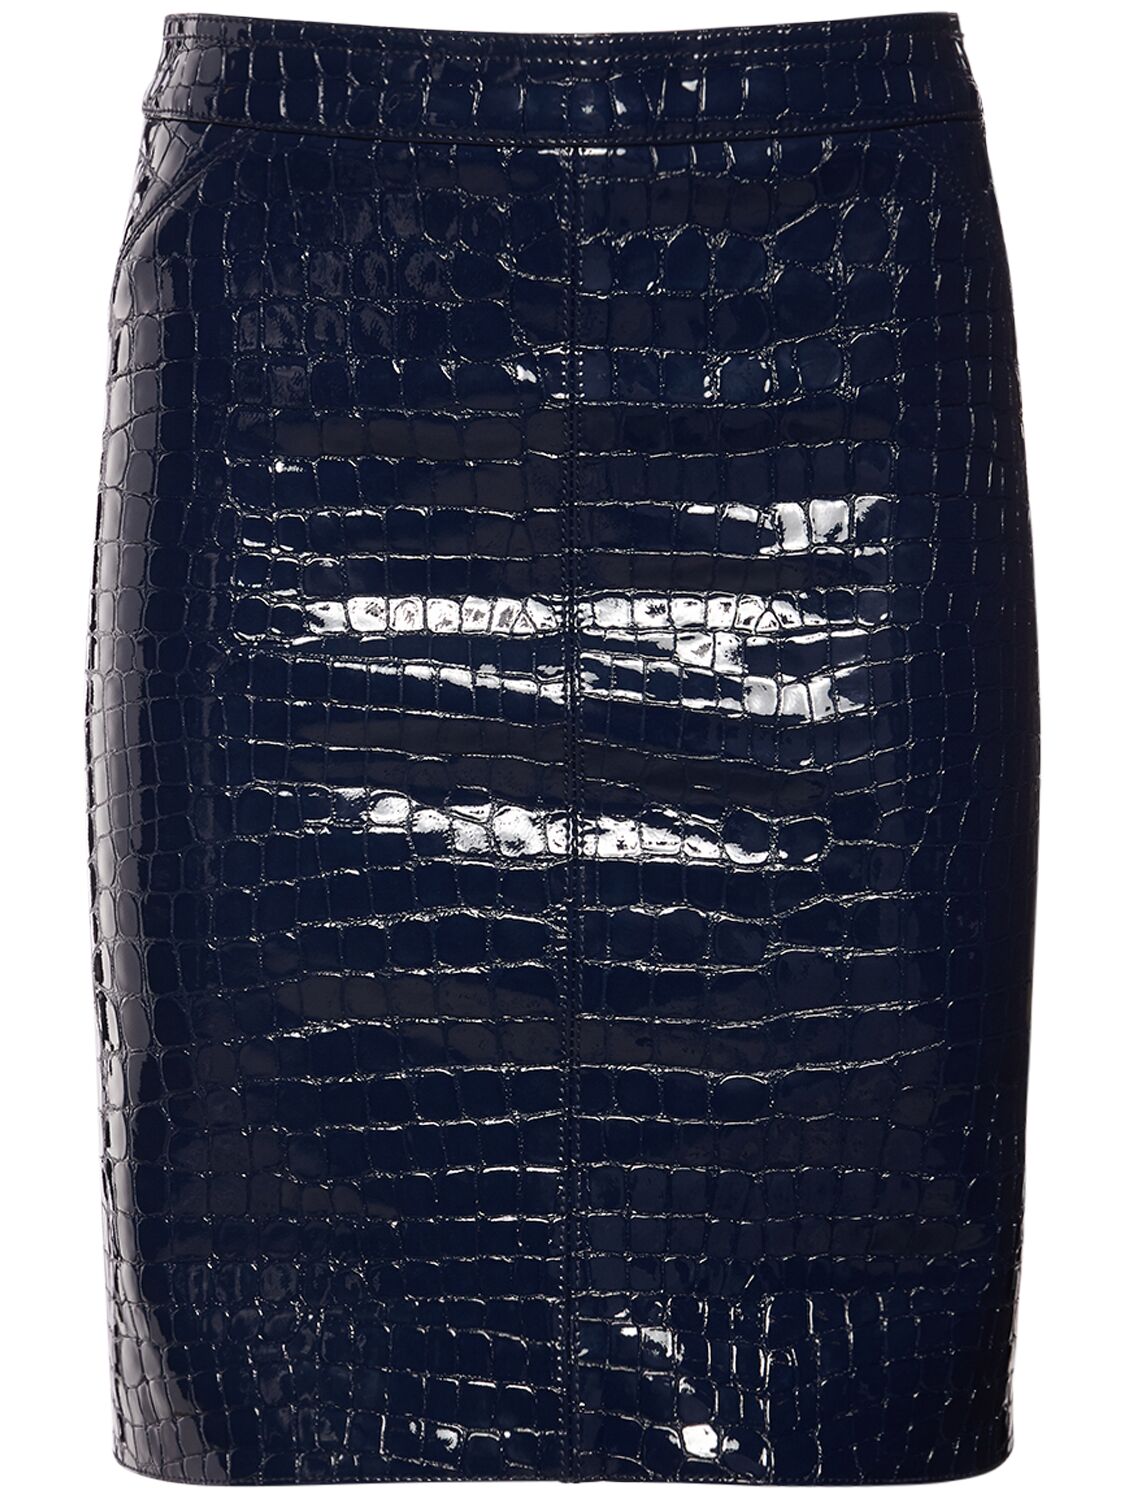 Glossy Croc Print Leather Mini Skirt